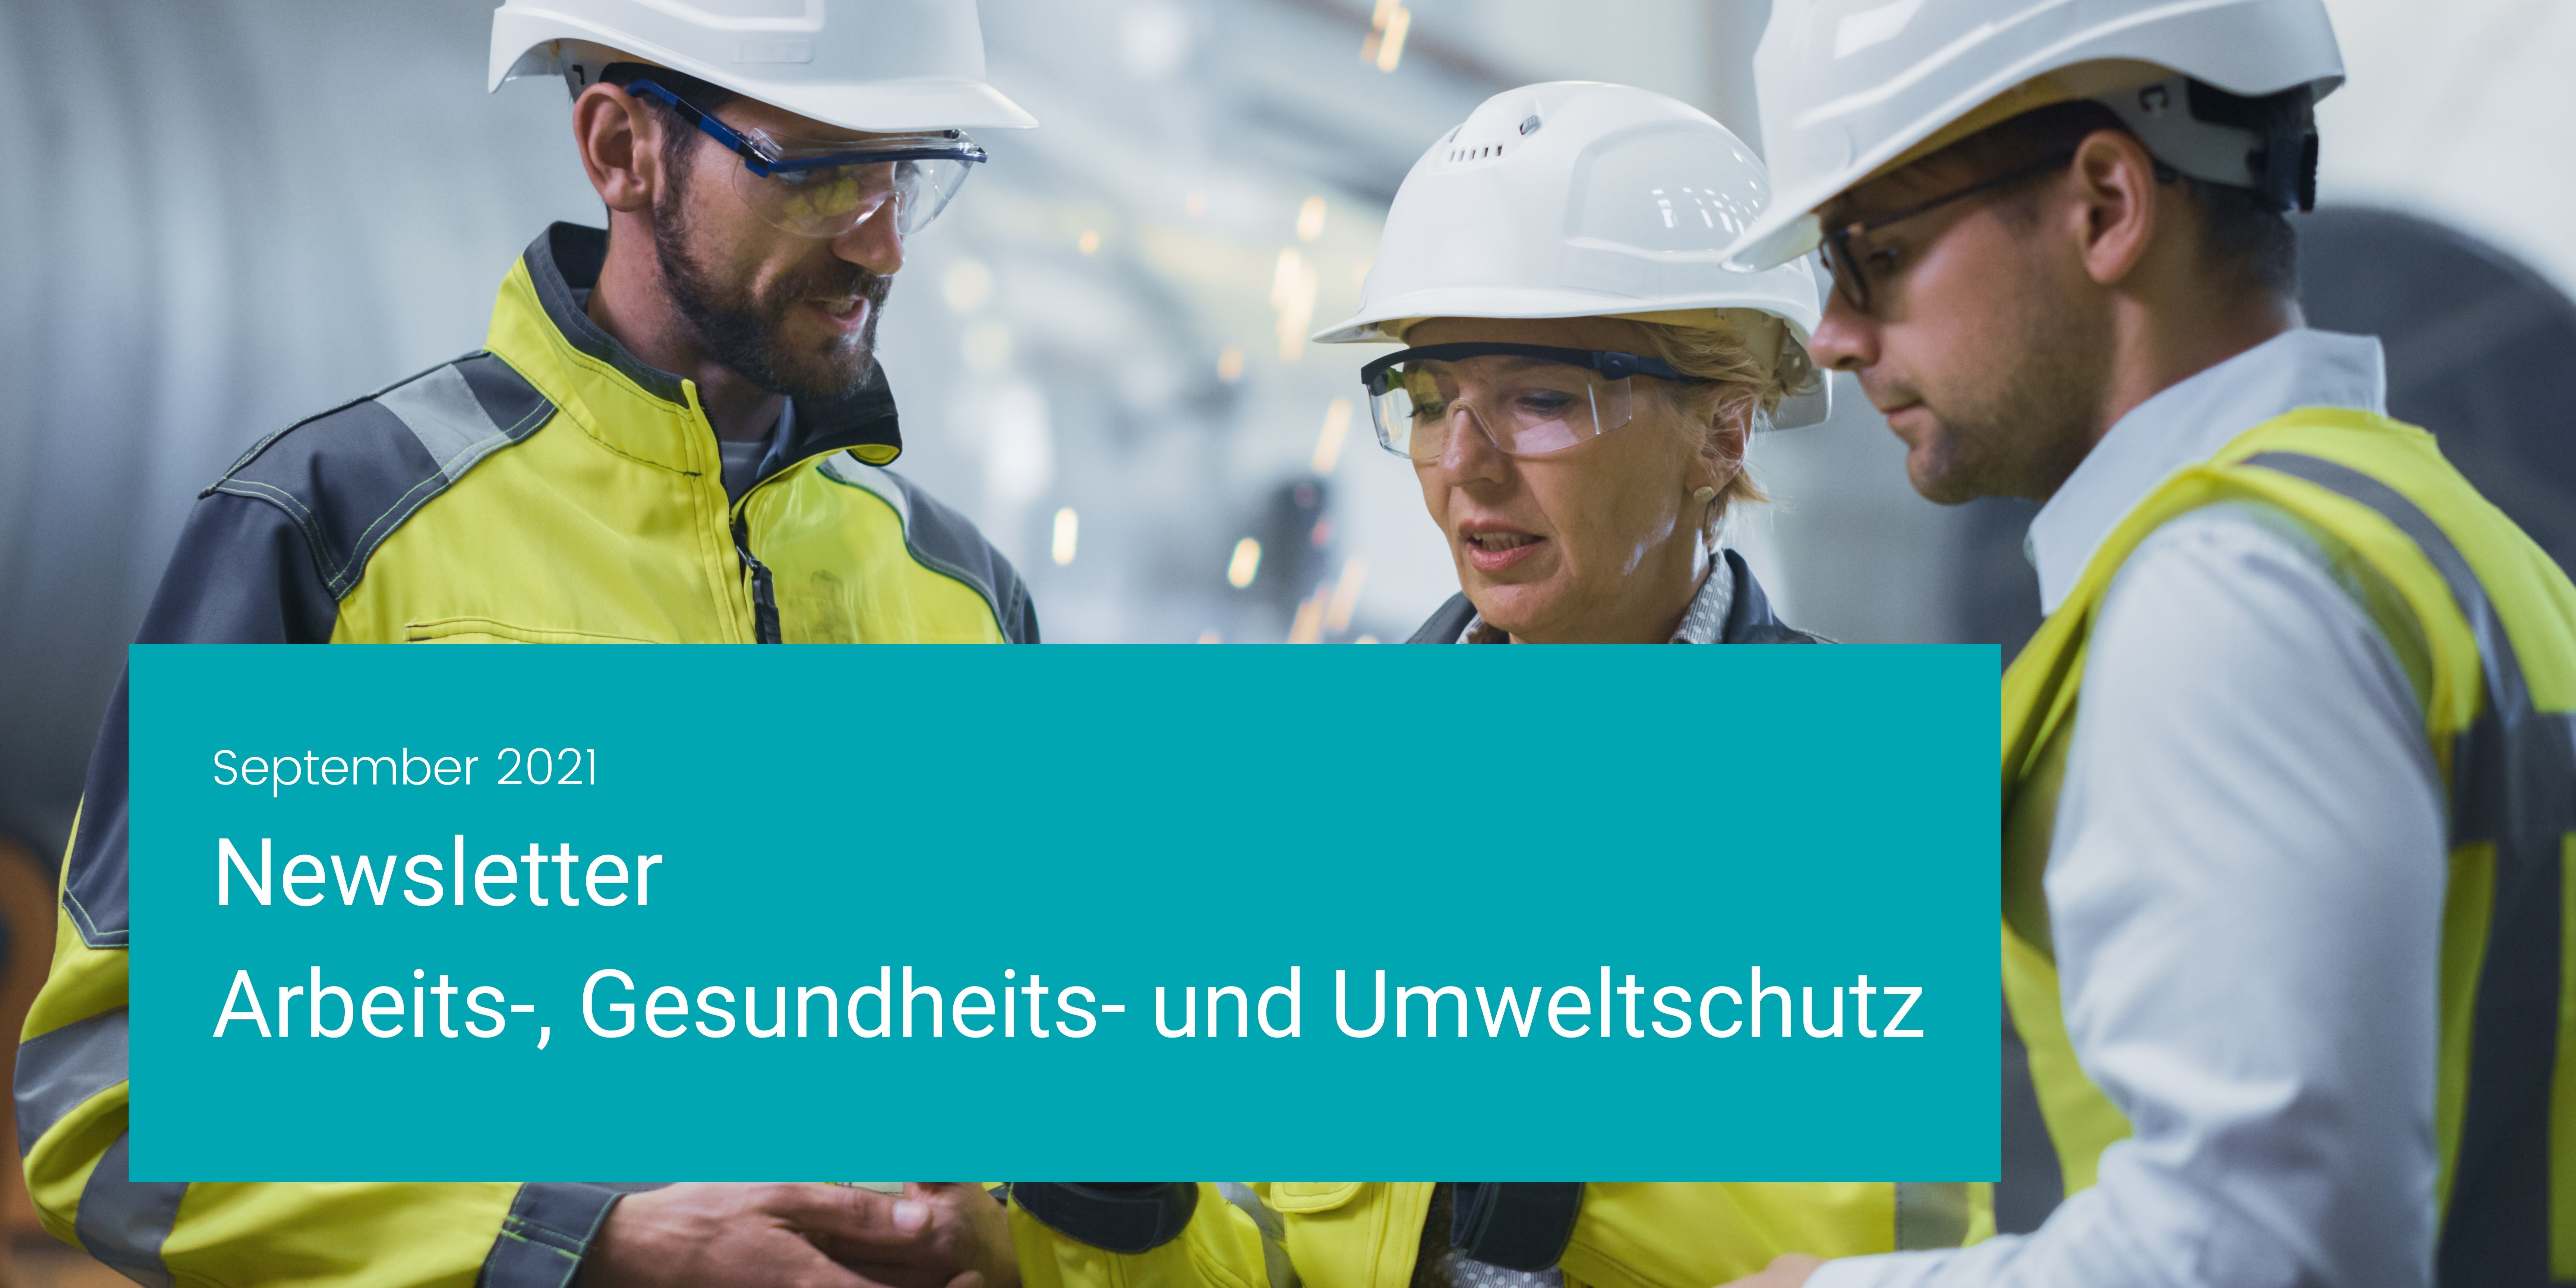 Header image which shows a laboratory and a green box with a headline: April 2021, Gebäudeleittechnik und Industrie 4.0